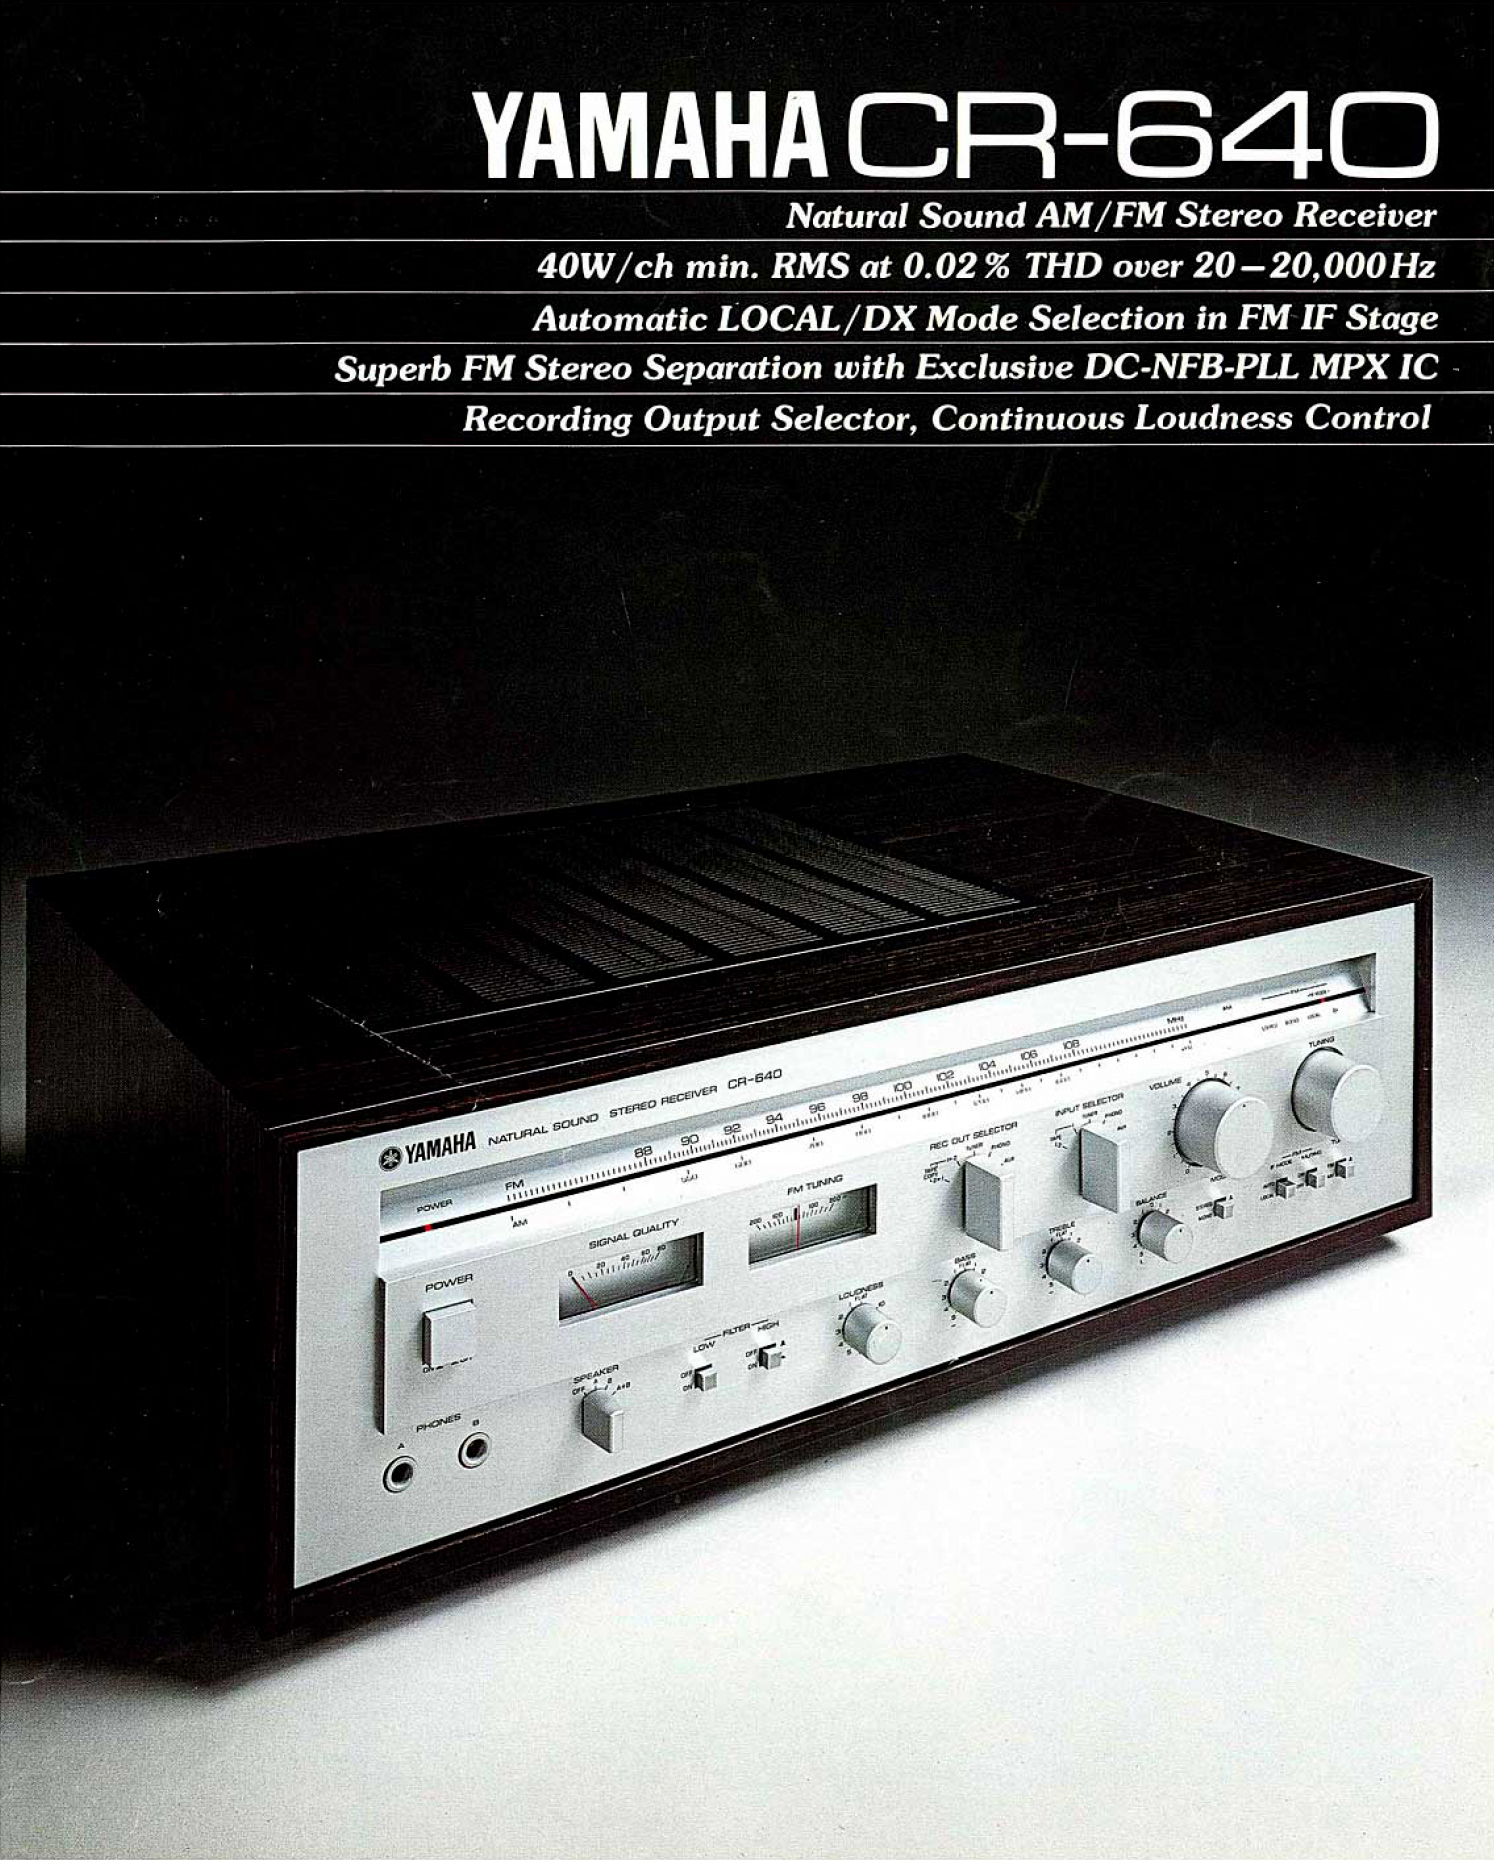 Yamaha CR-640-Prospekt-1.jpg